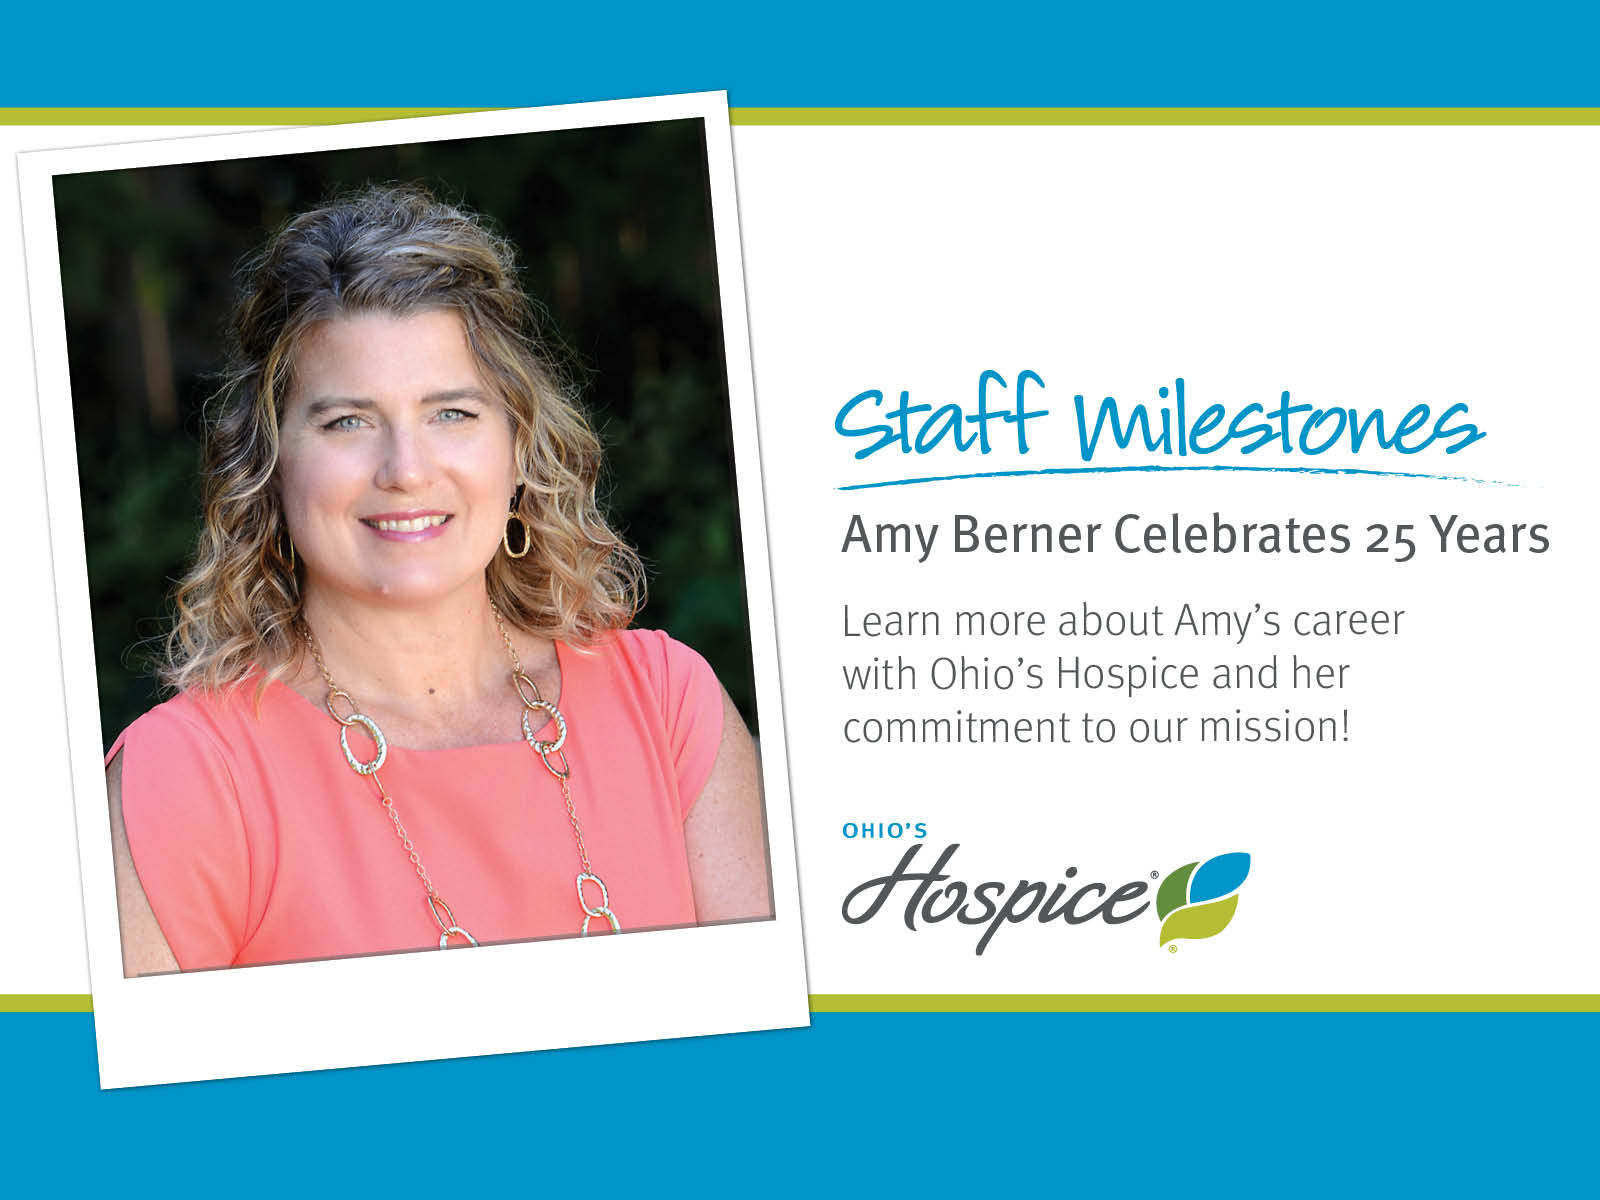 Staff Milestones. Amy Berner Celebrates 25 Years. Ohio's Hospice.